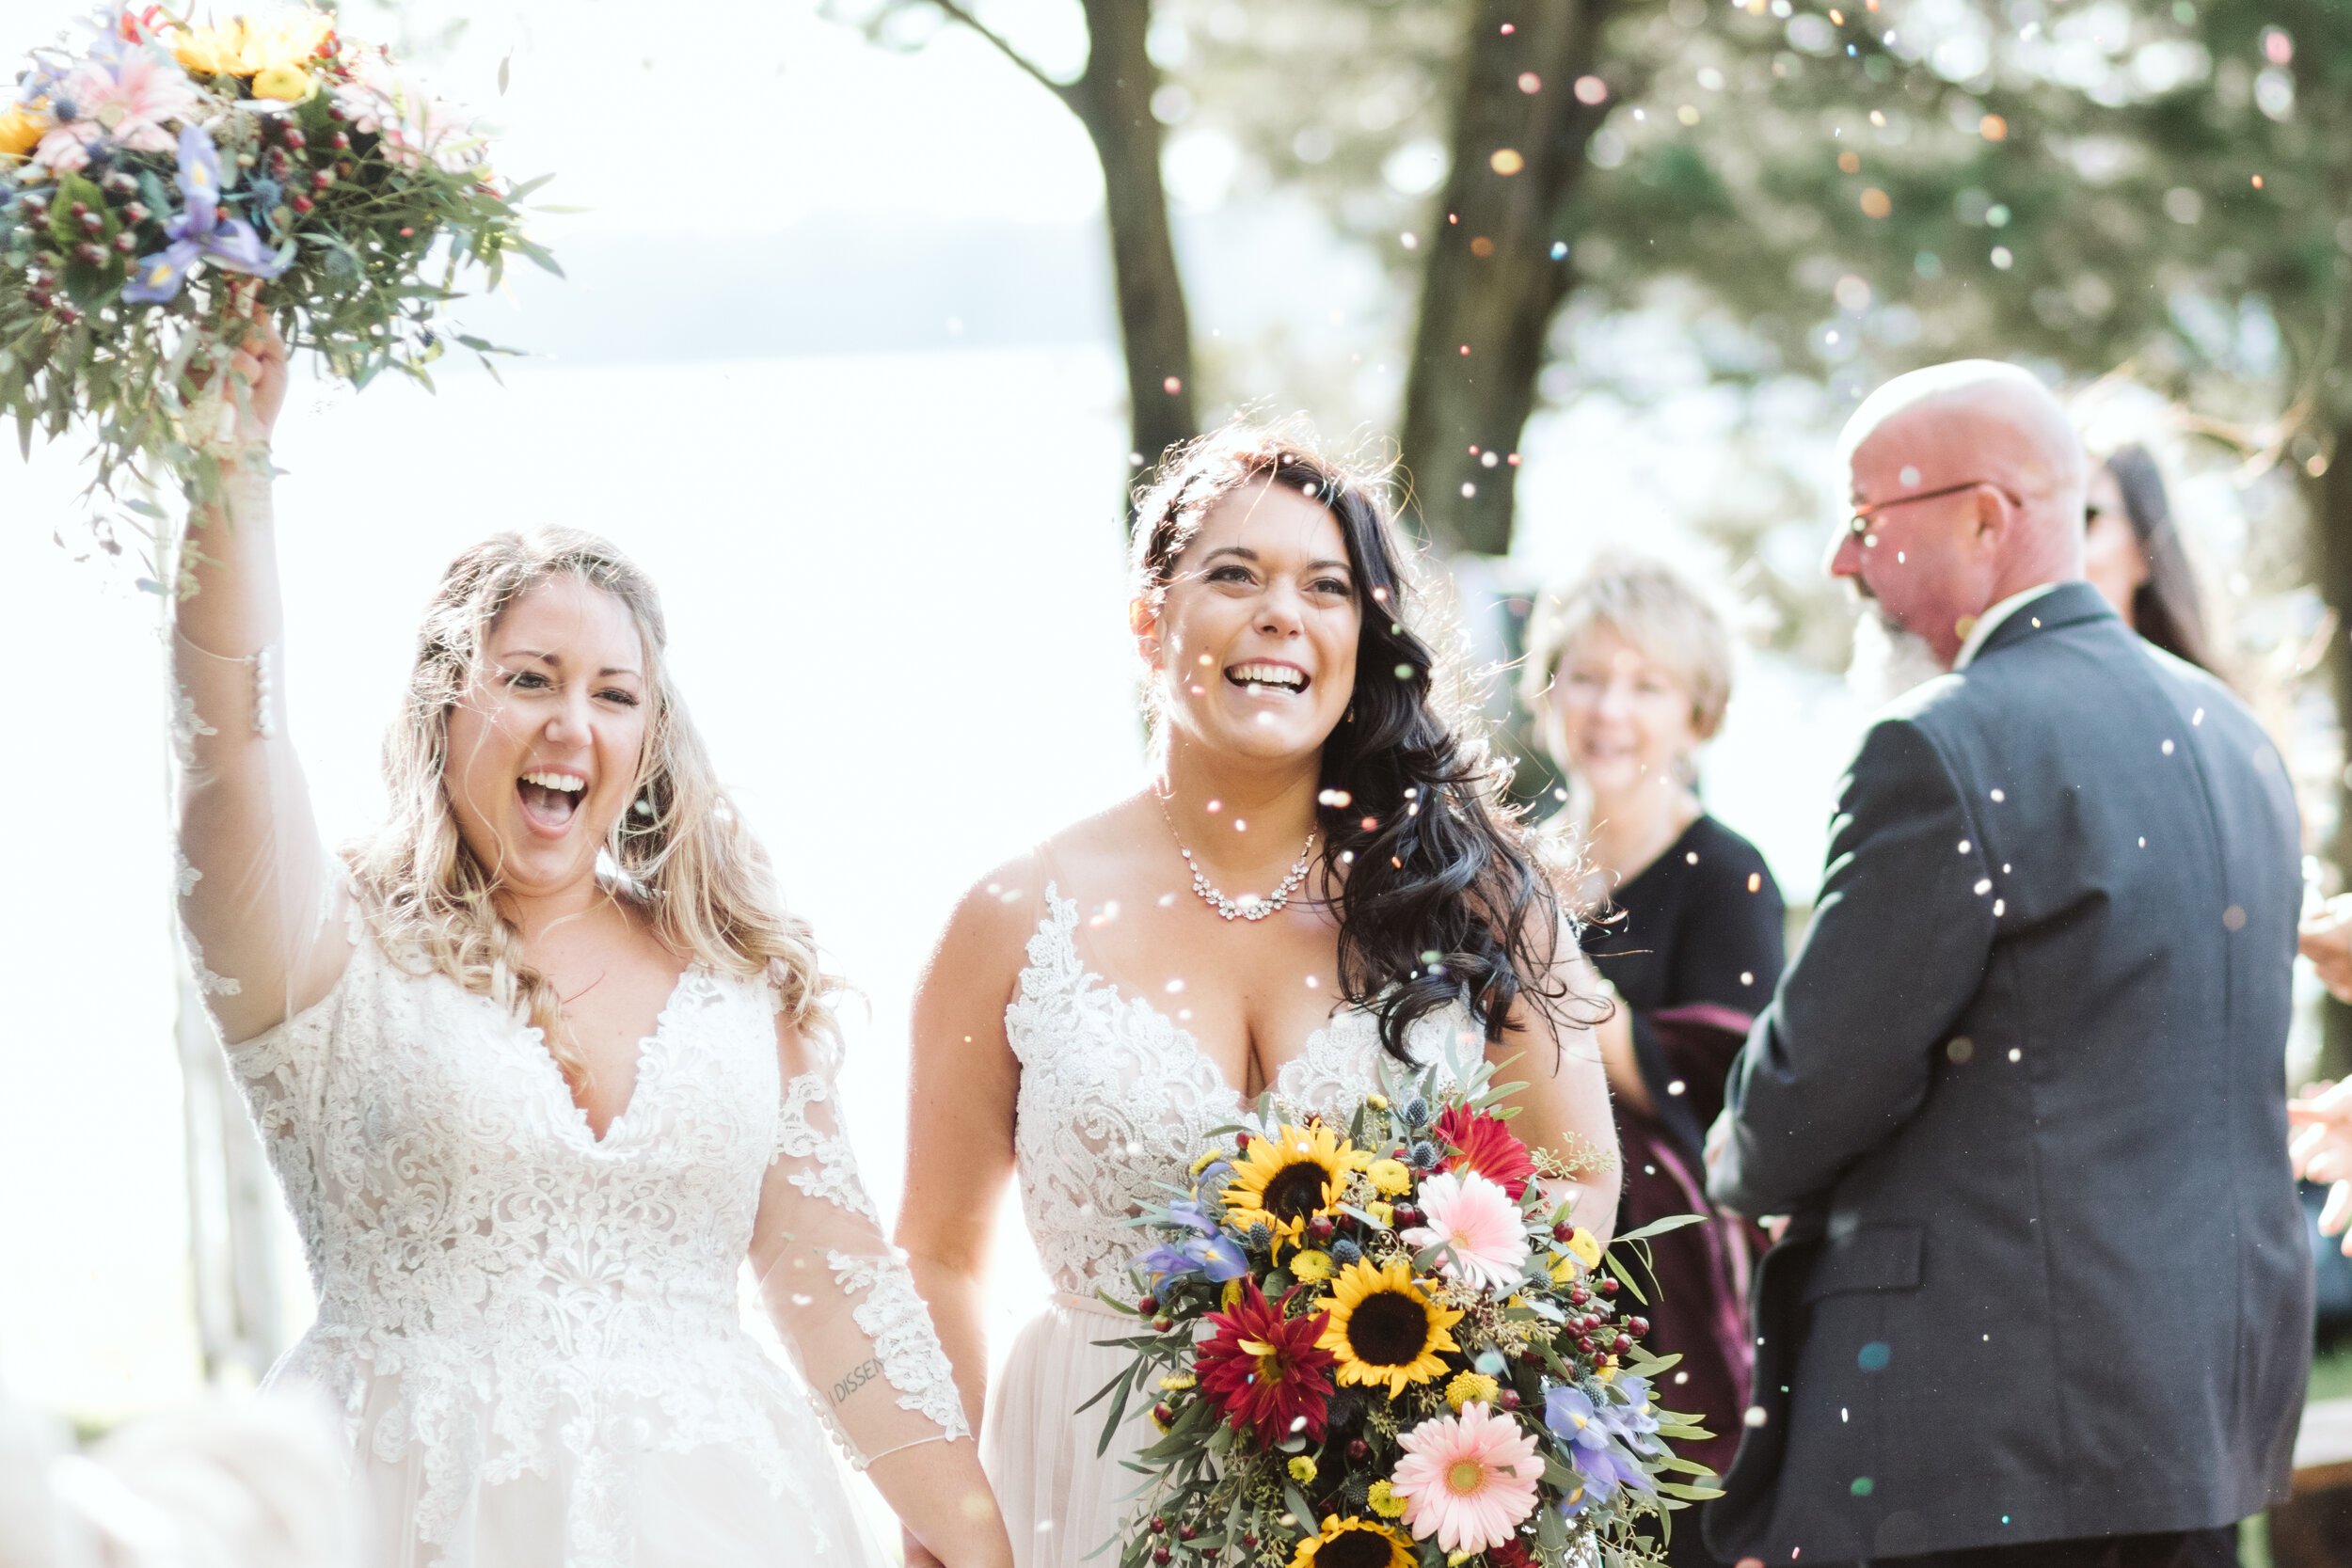 eisley images | Rhode Island Legacy Photographer for Weddings ...